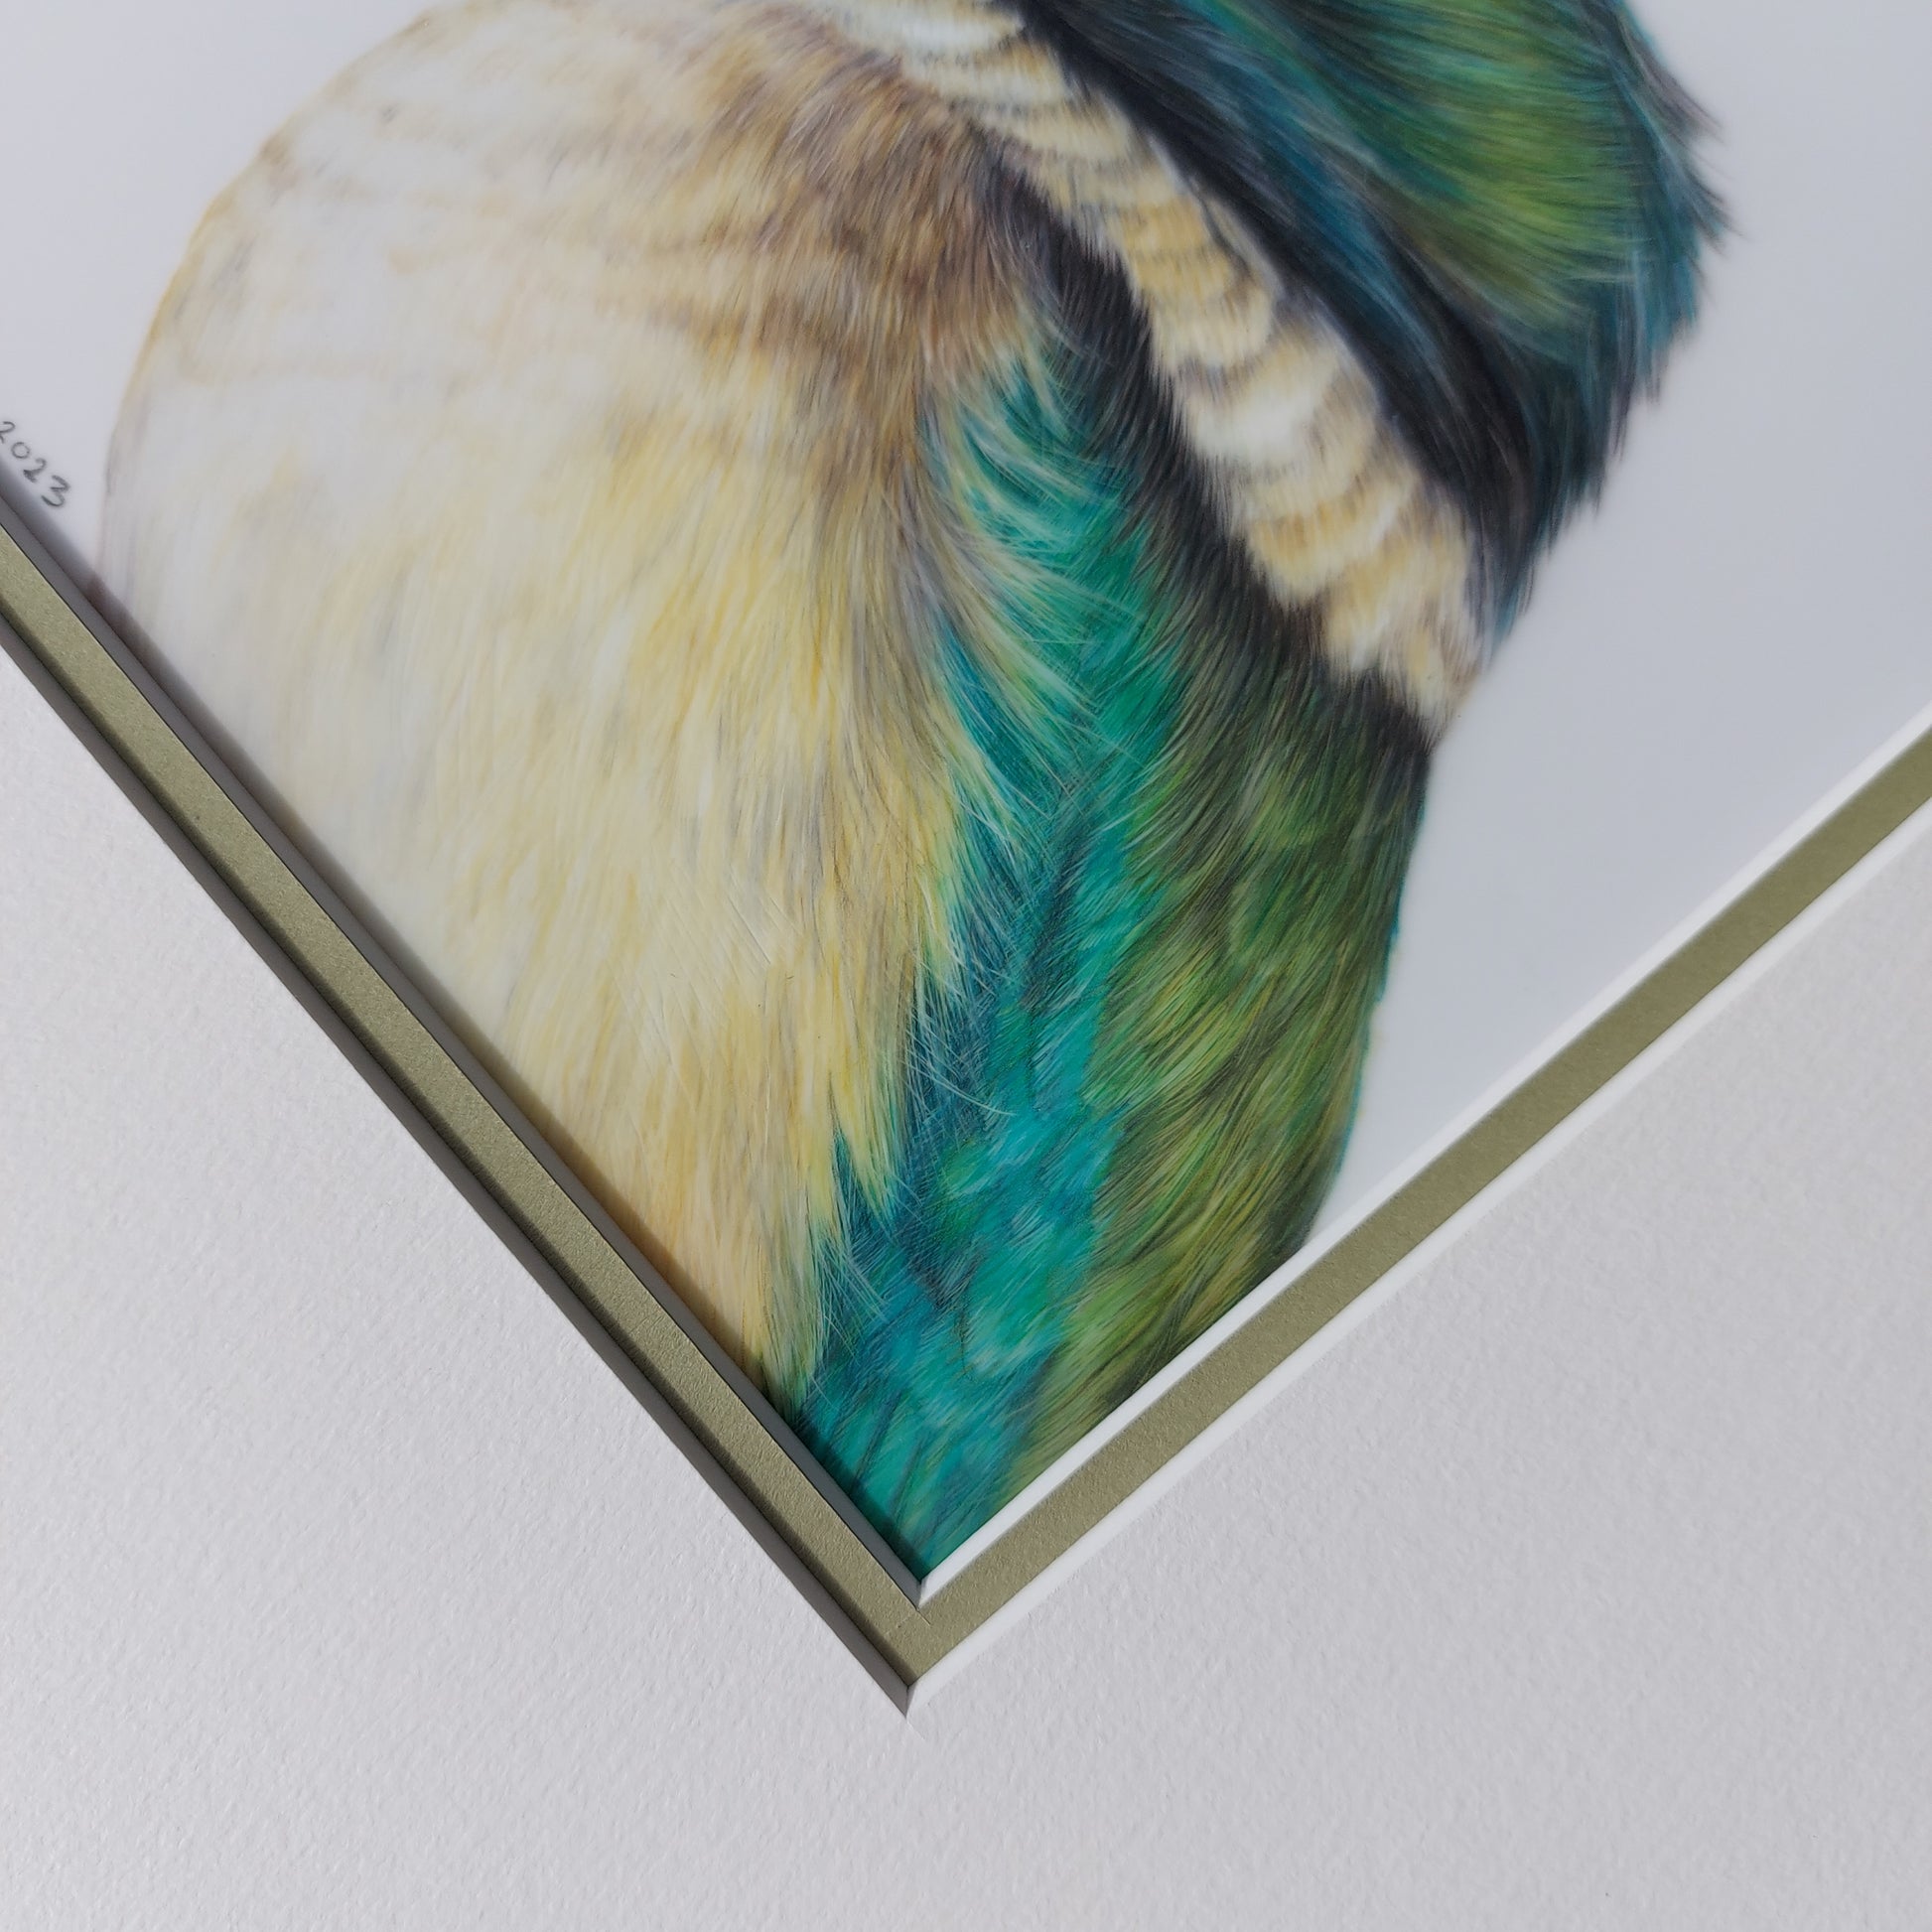 Stealthy Kingfisher ORIGINAL - Joanne Bowe | New Zealand Artist